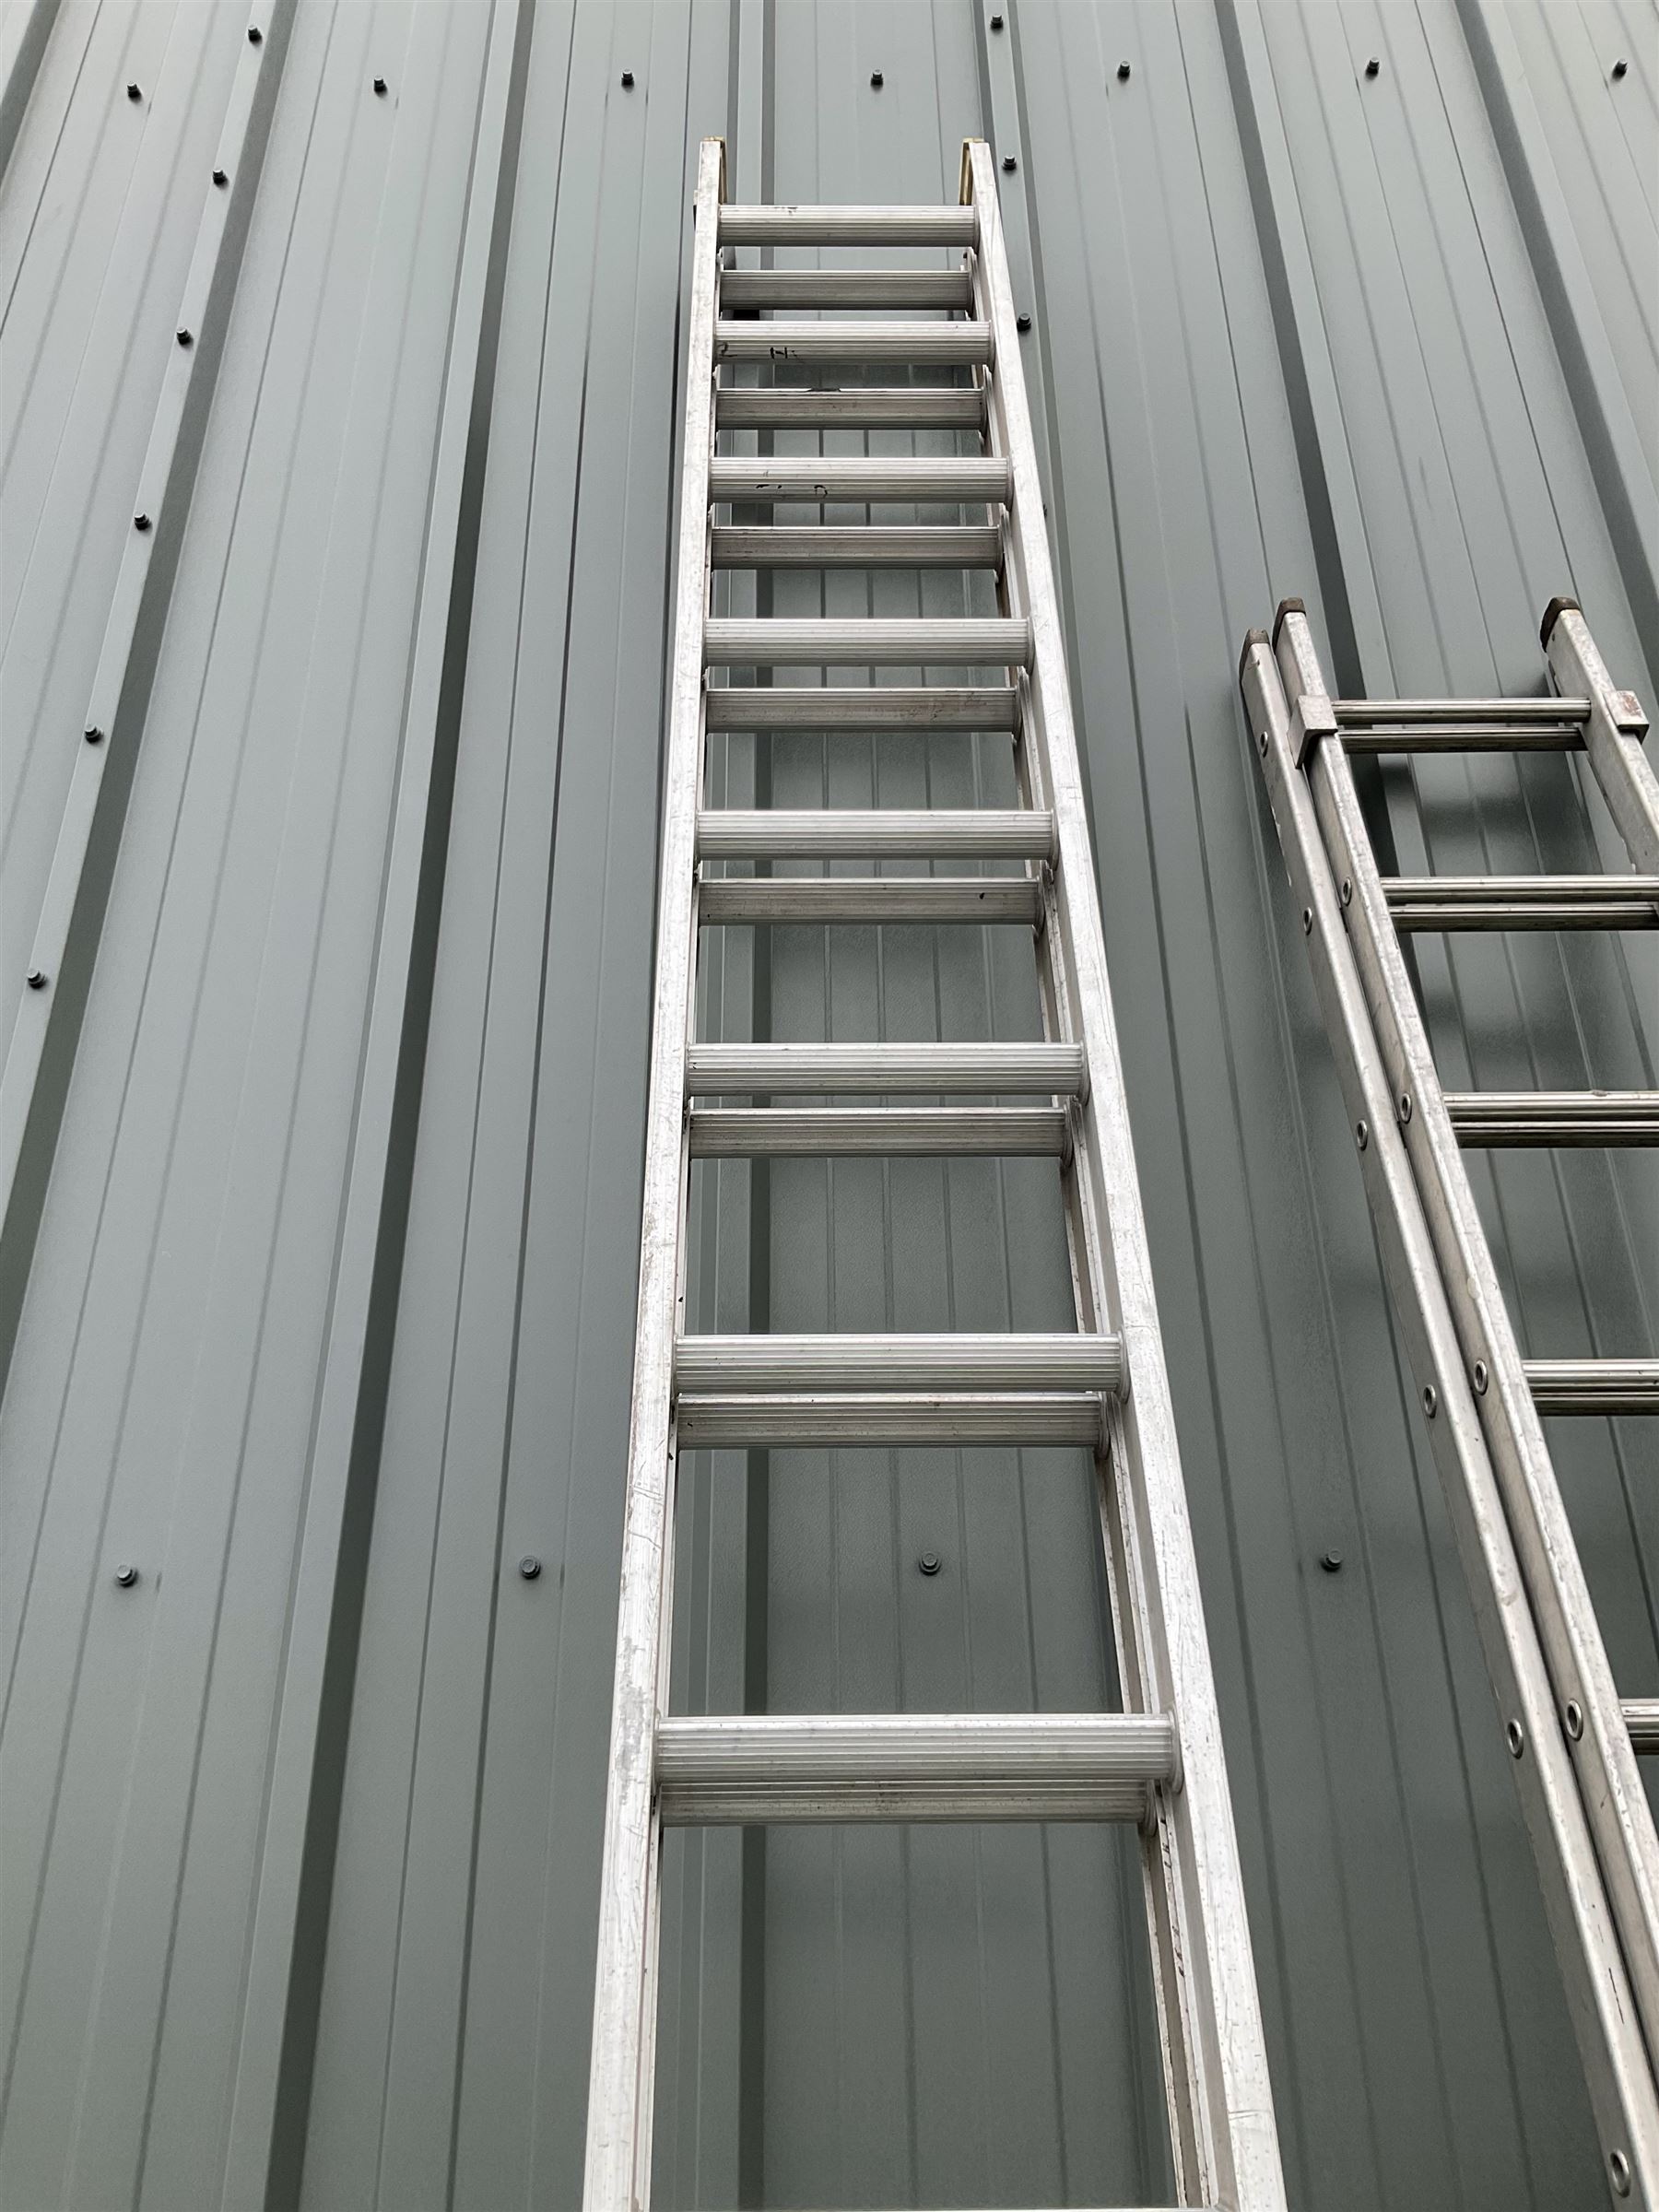 Aluminium extending ladders (4m closed) with another aluminium ladders (330cm closed) - Image 4 of 5